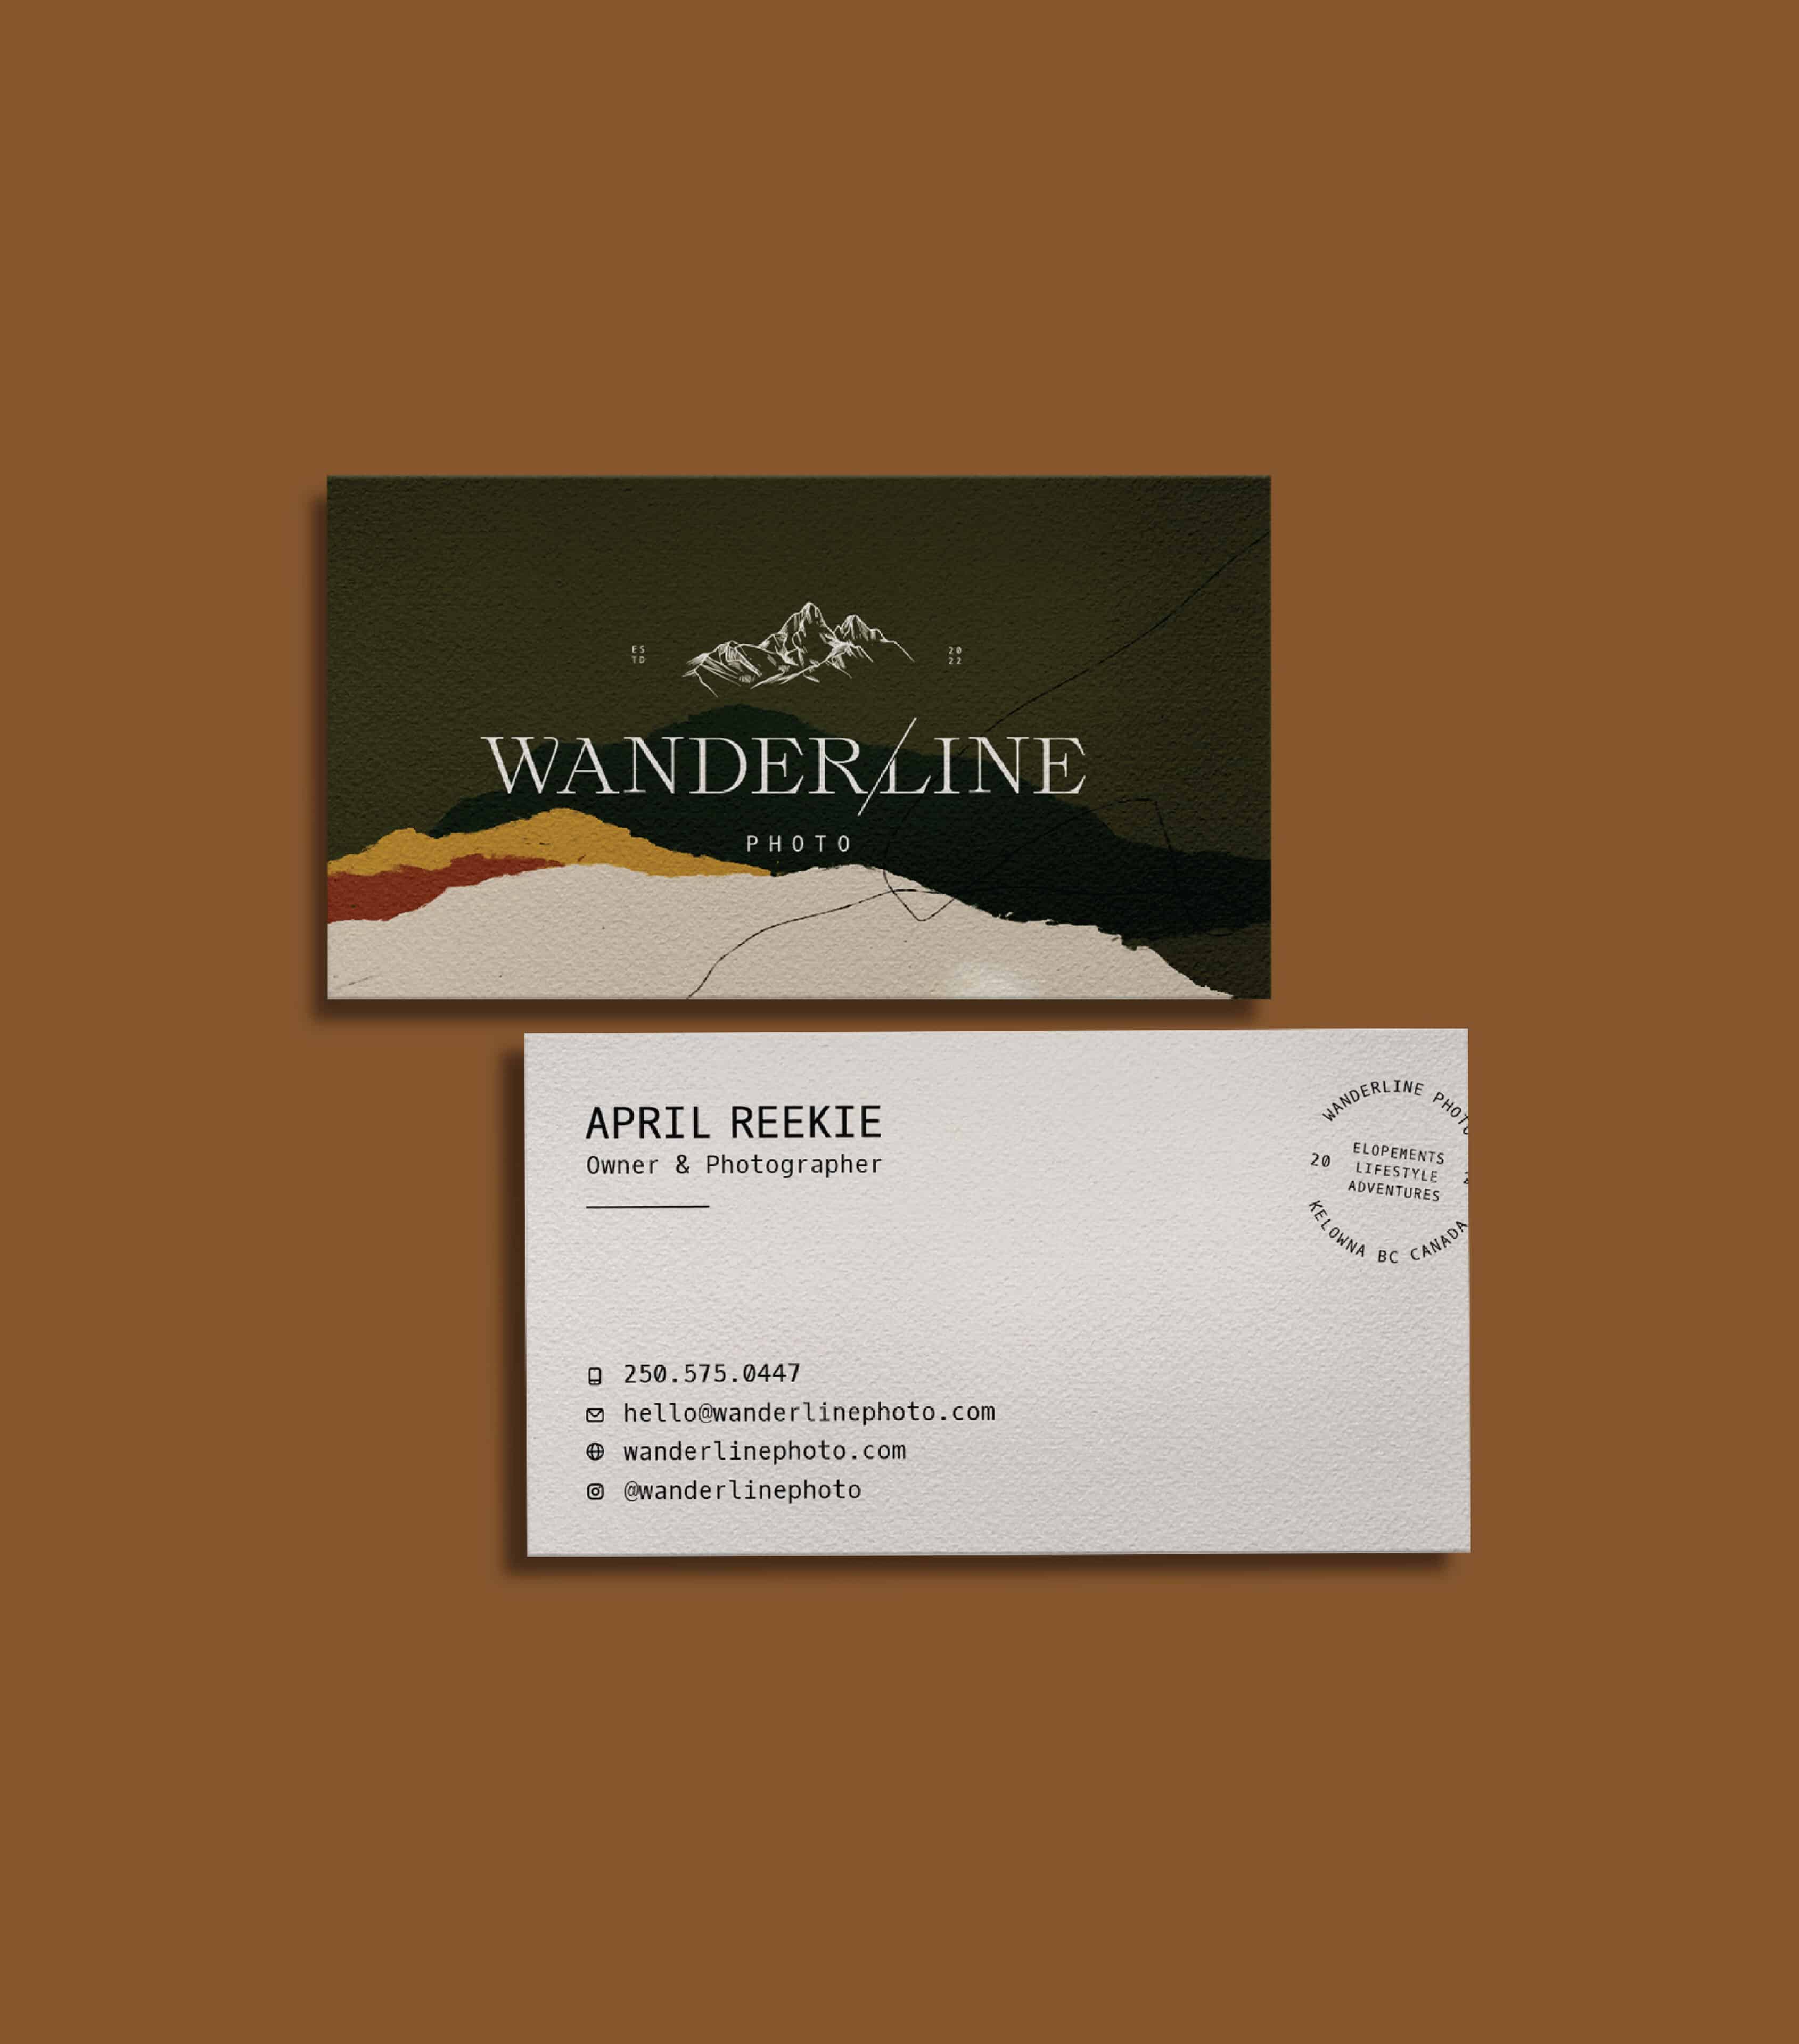 Wanderline Photo business card mockup